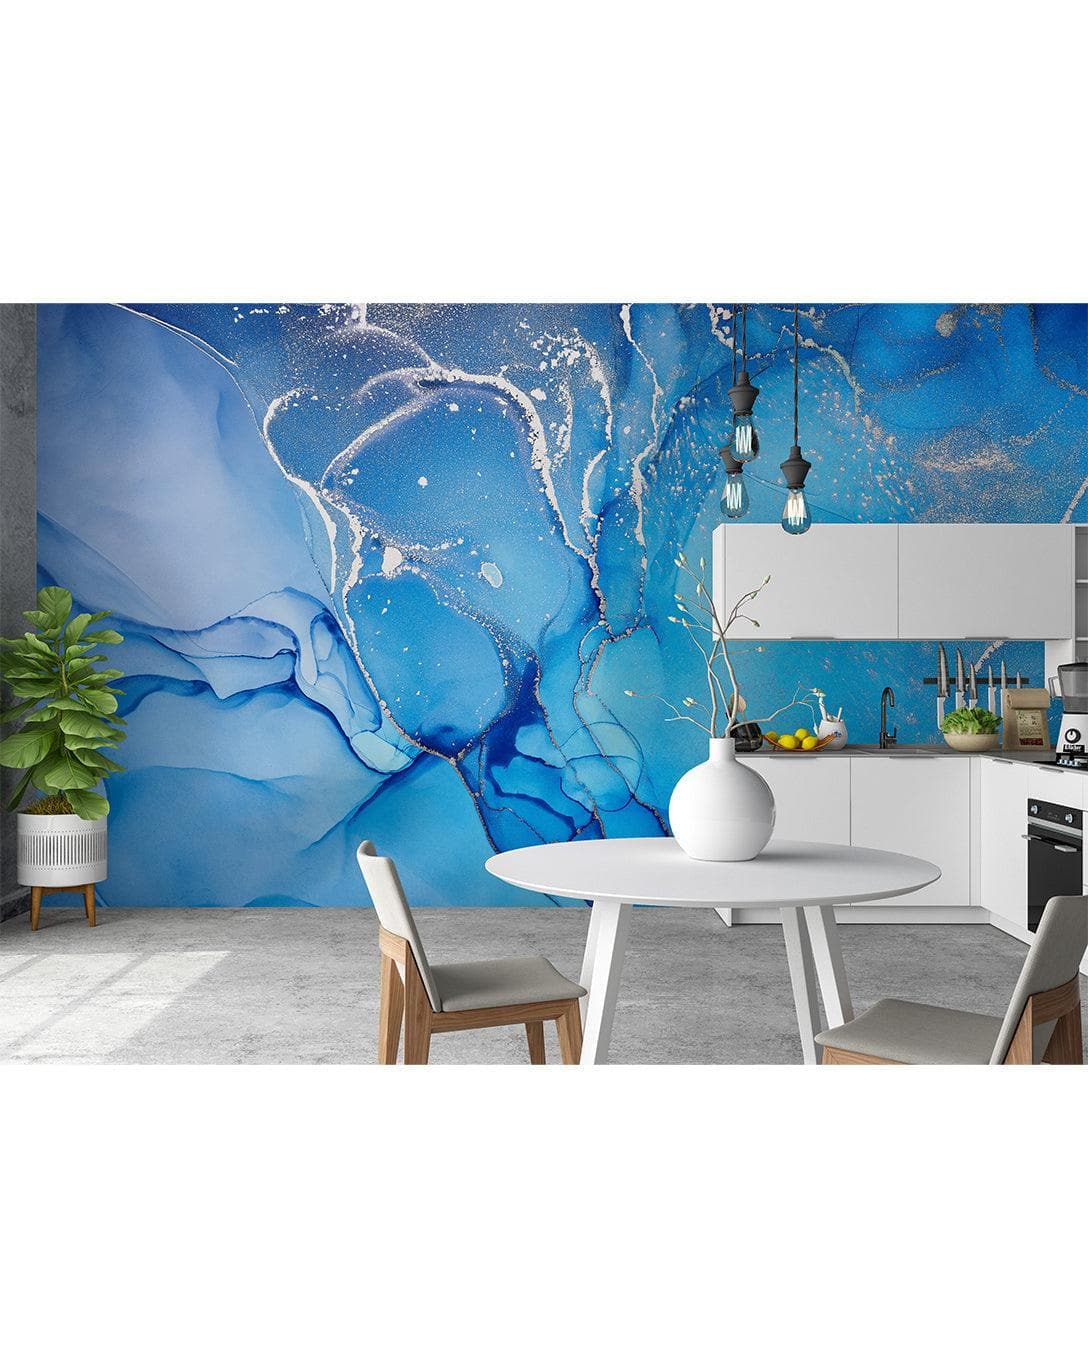 Gray Fern Botanical Wall Mural Blue Watercolor Paint Abstract Marble Wall Mural Blue Watercolor Paint Abstract Marble Wall Mural 